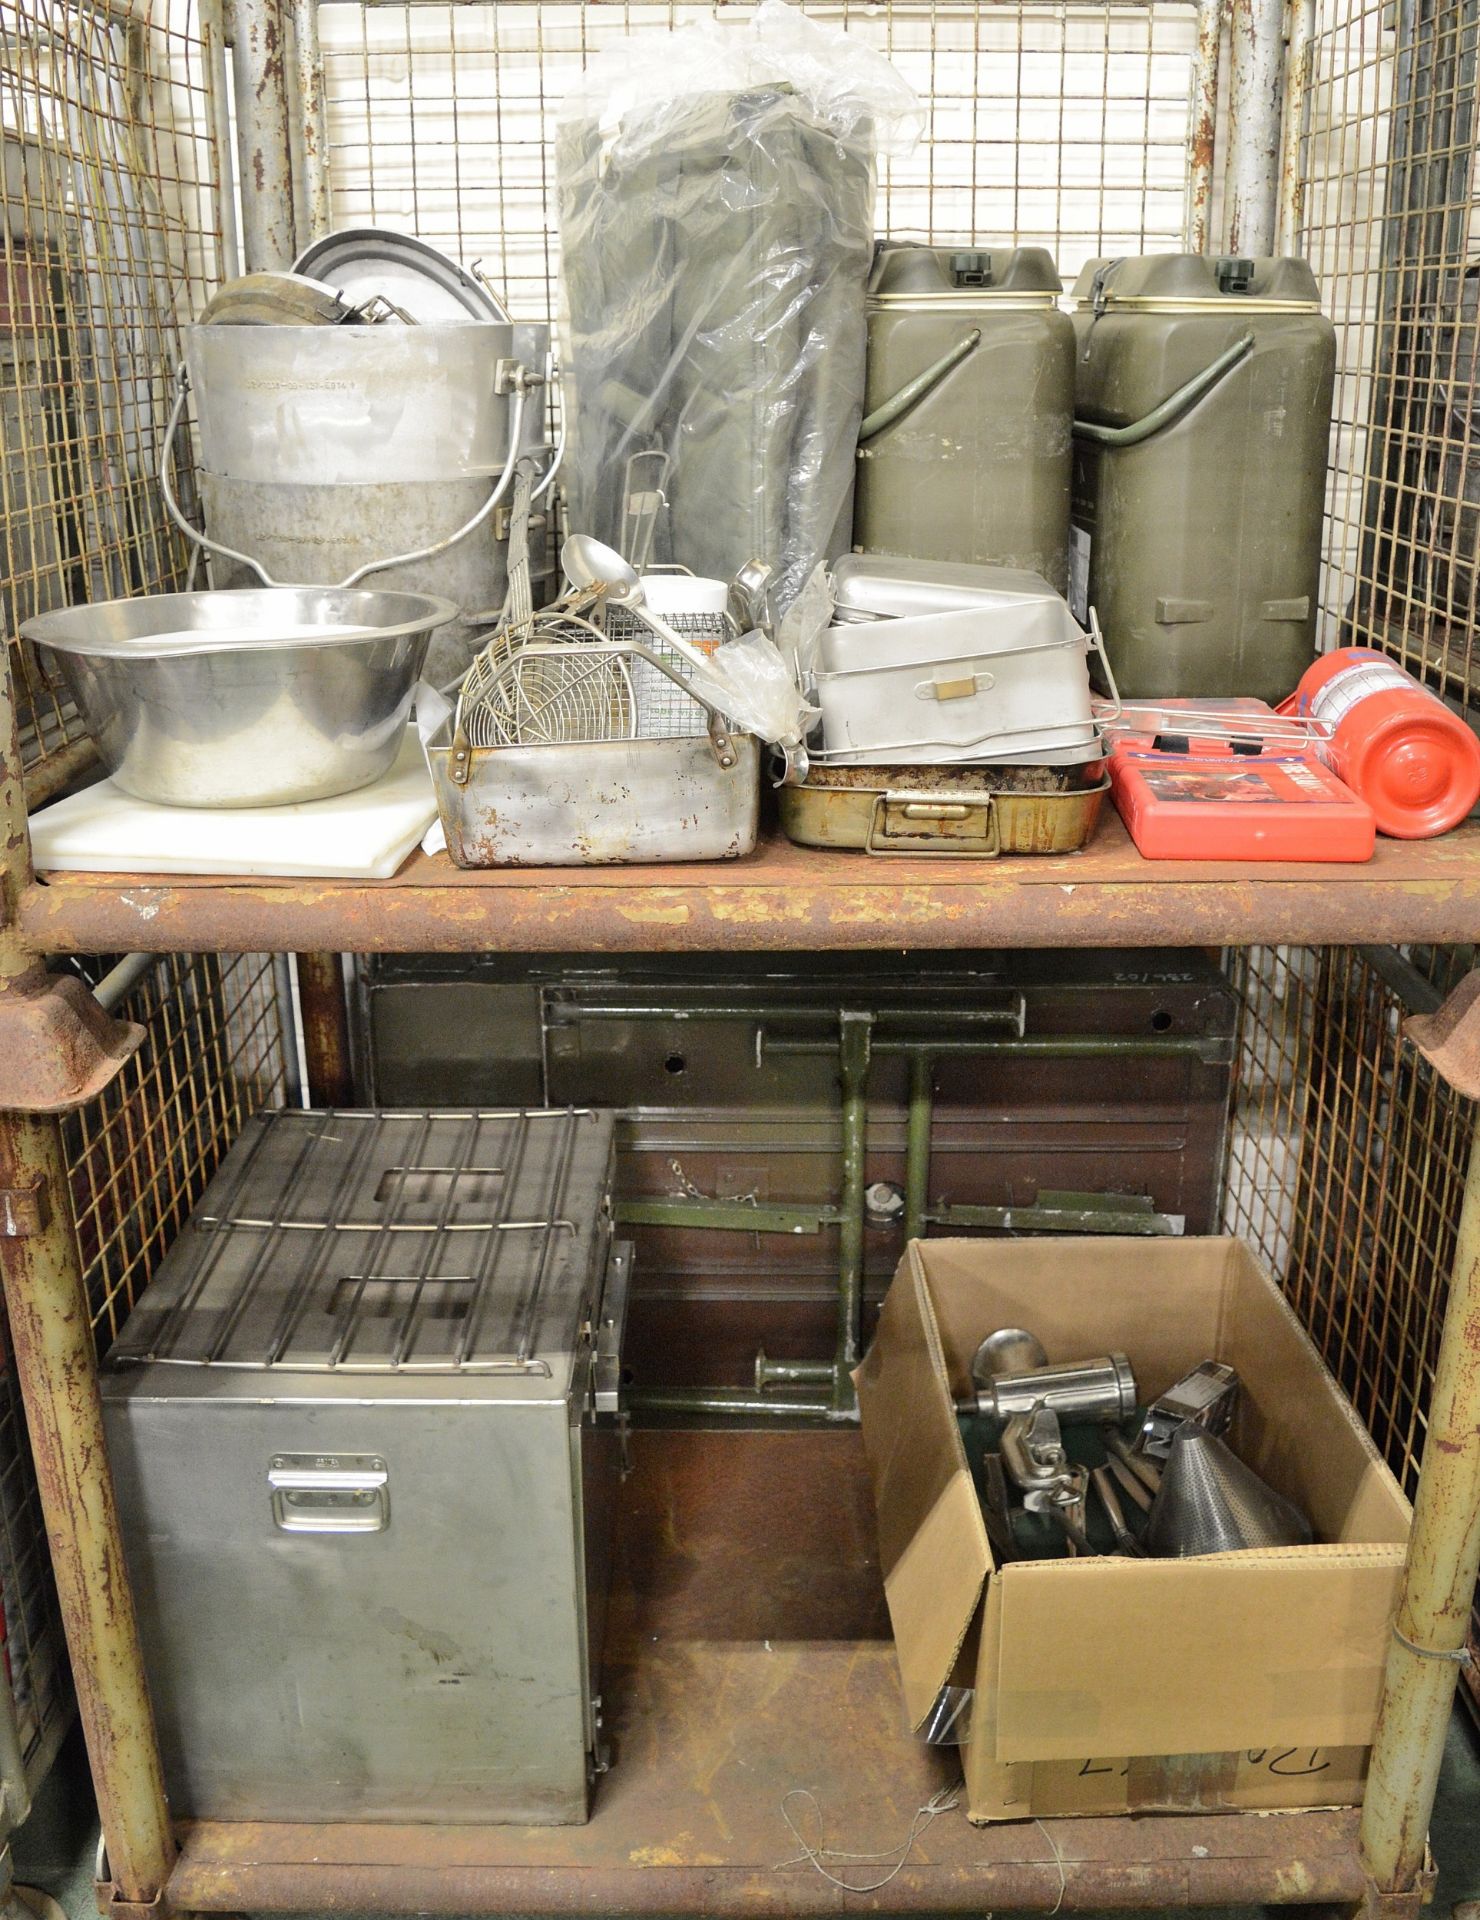 Field Kitchen set - cooker, oven, utensil set in carry box, norweigen food boxes, accessor